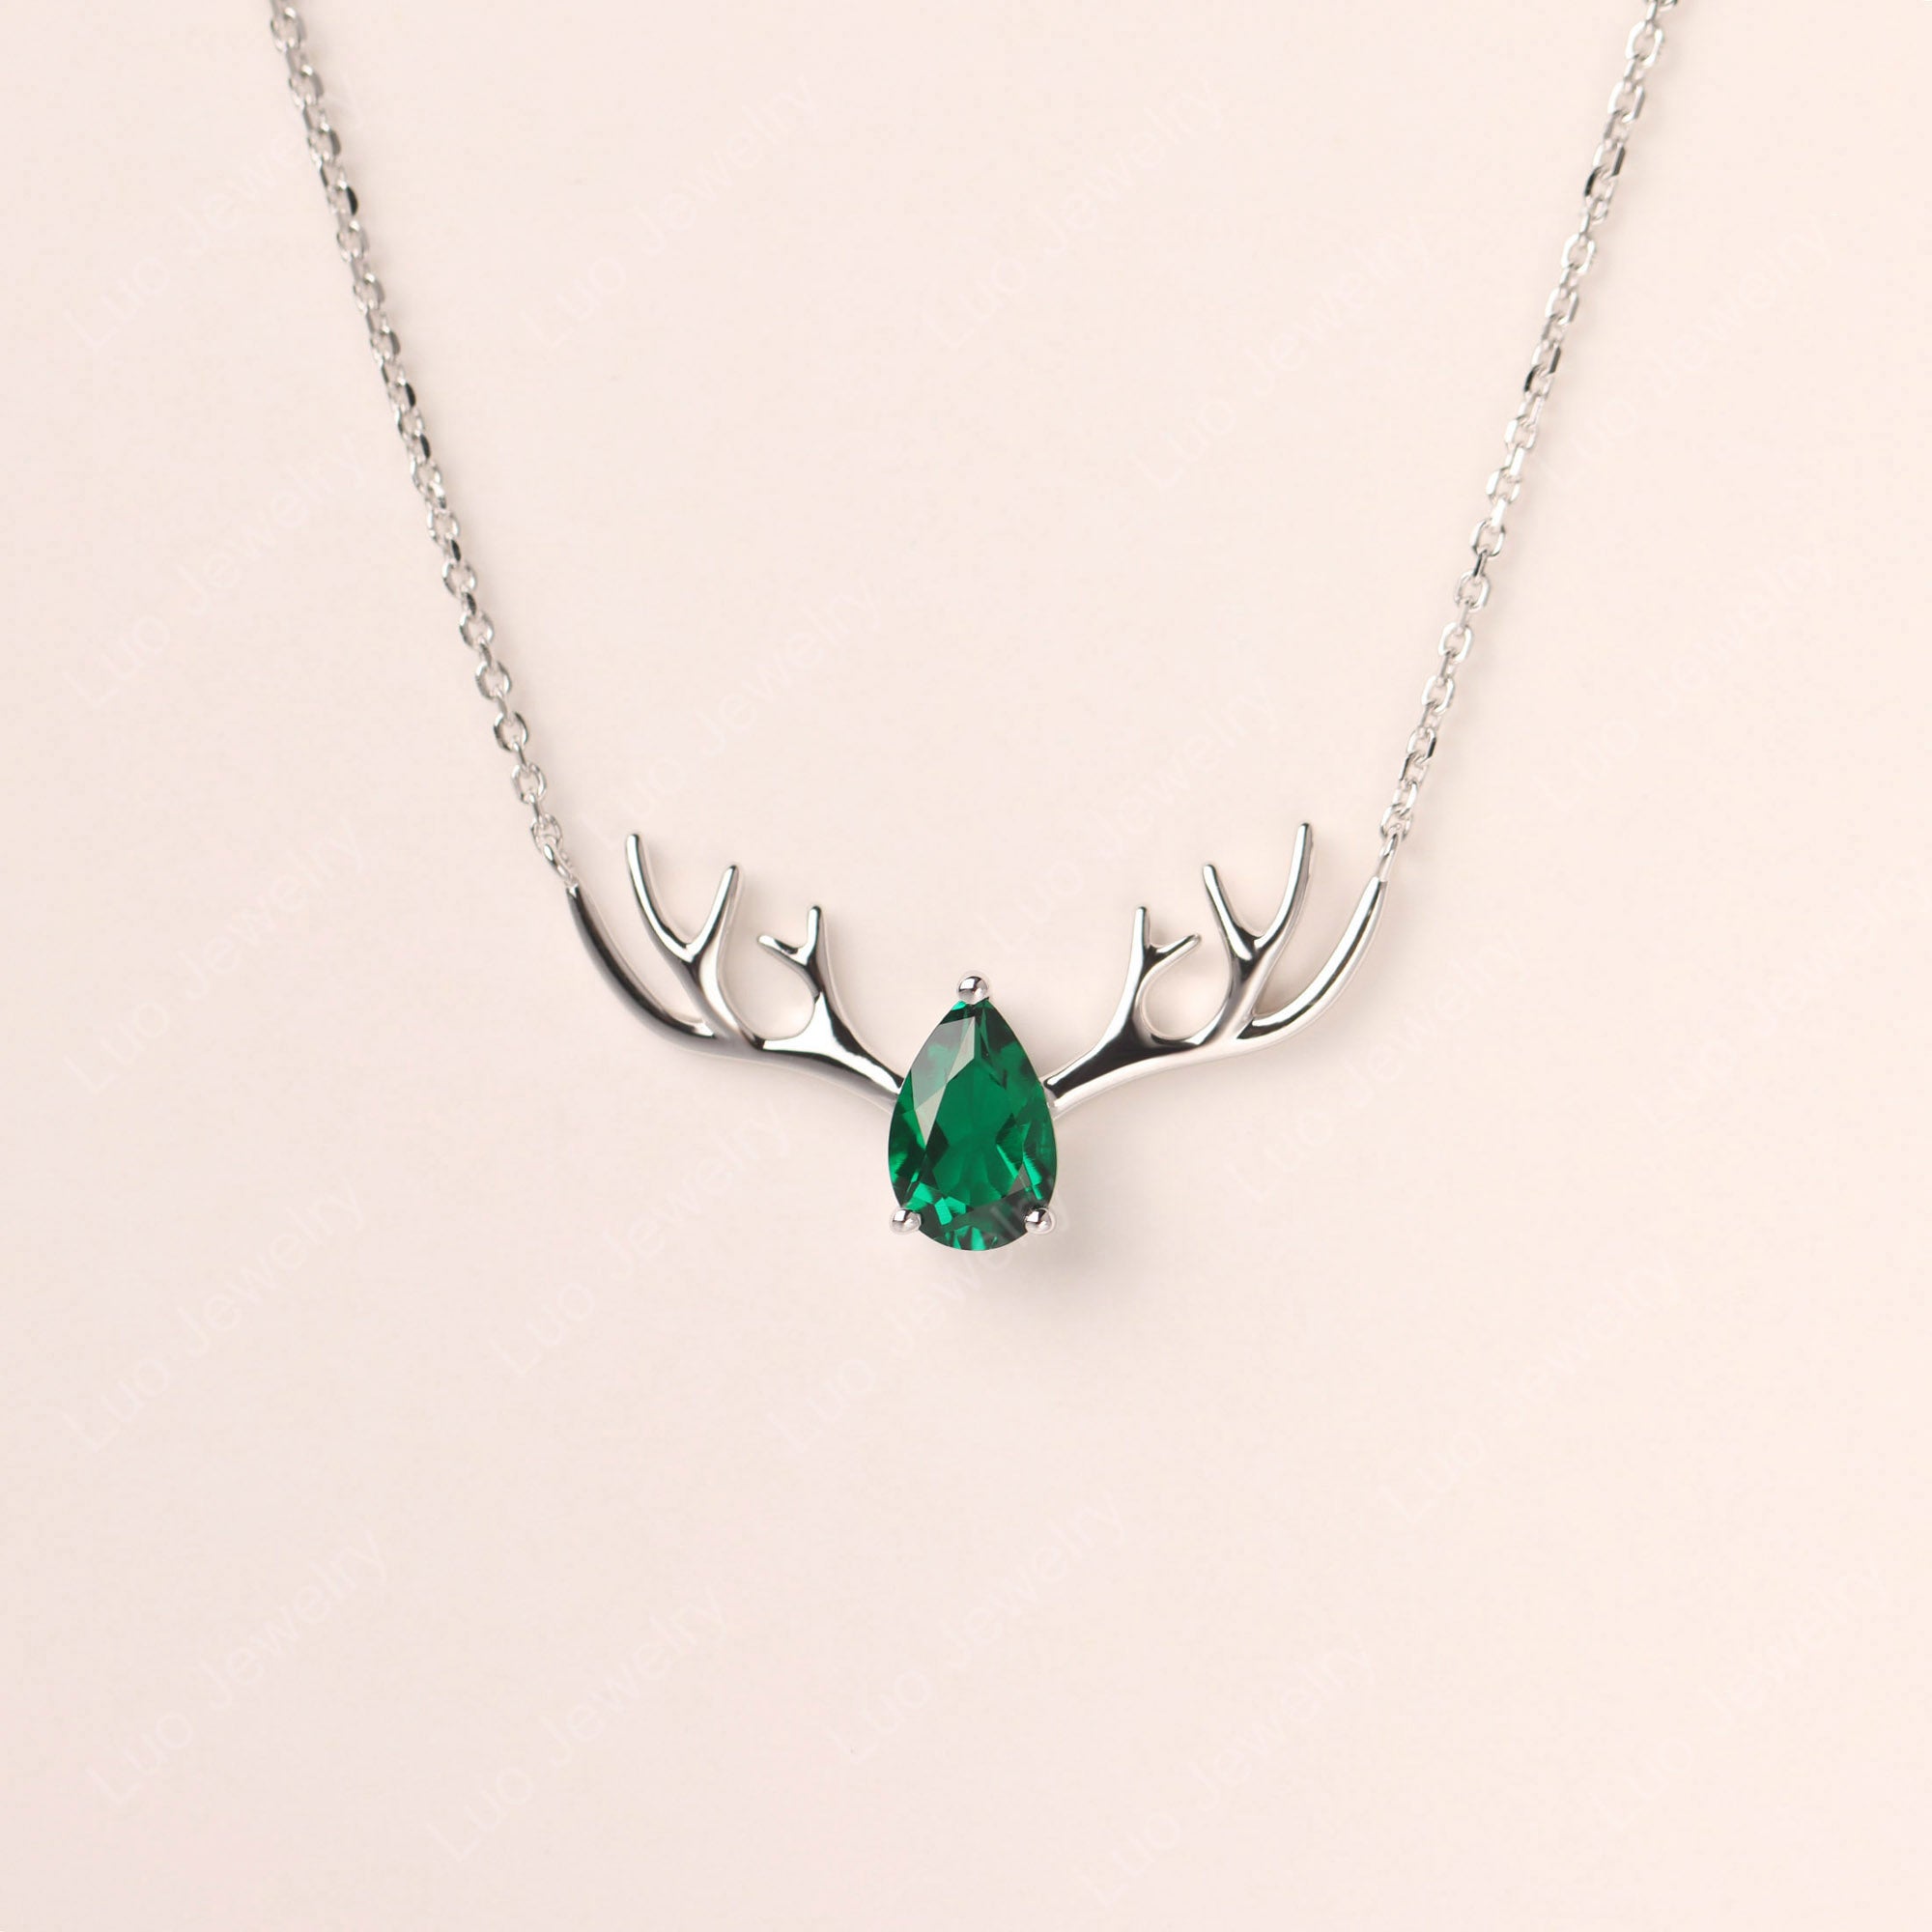 Birnenförmige Smaragdgeweih-Halskette